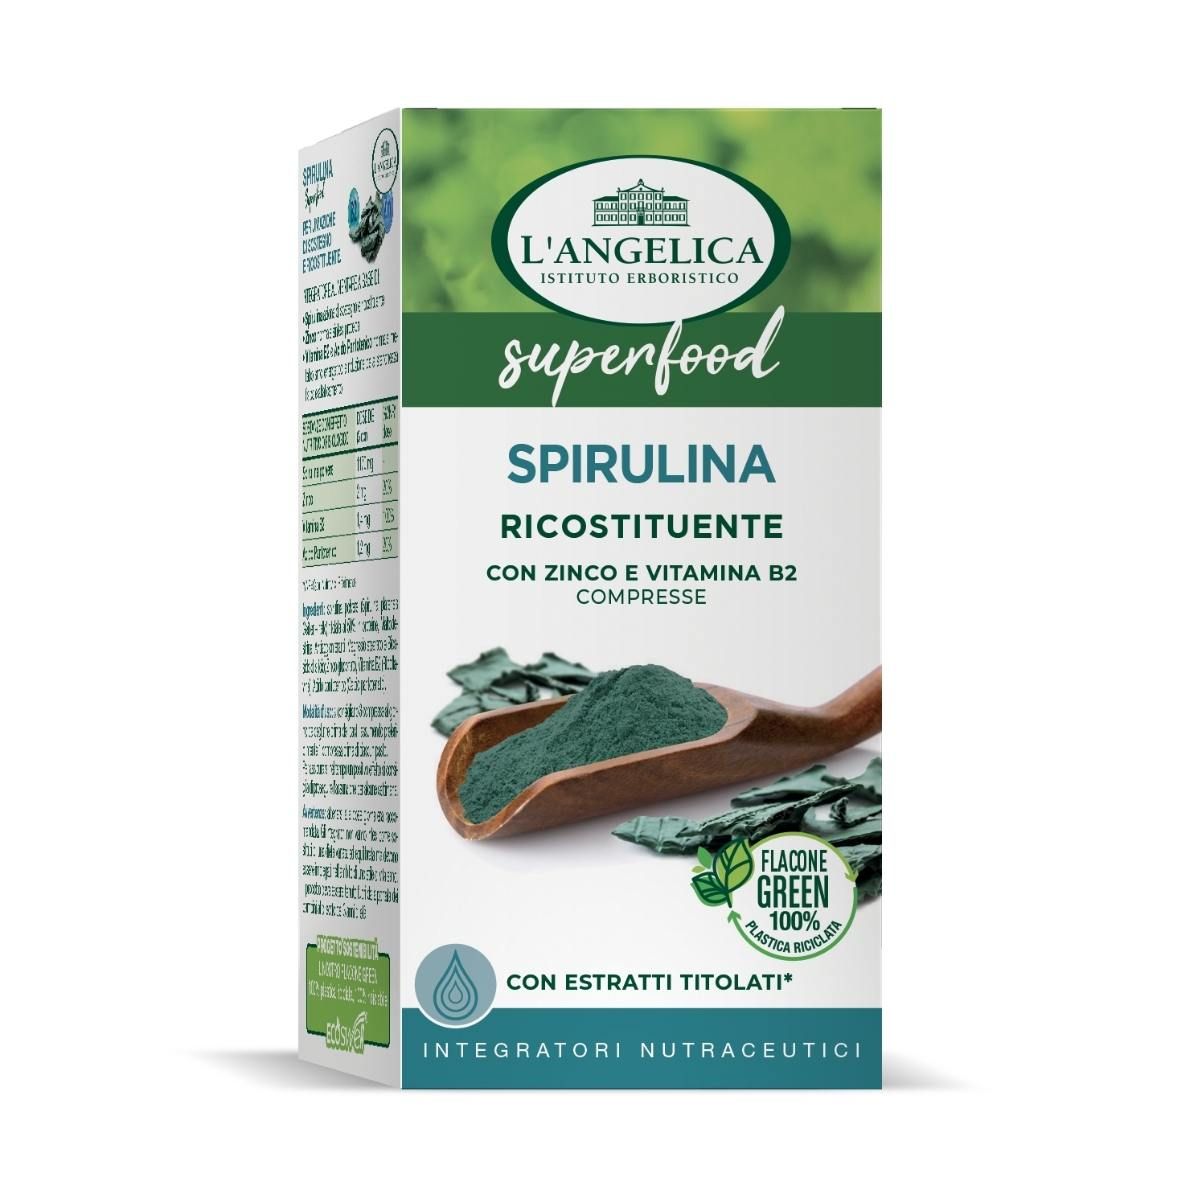 Spirulina - Supplement with restorative action